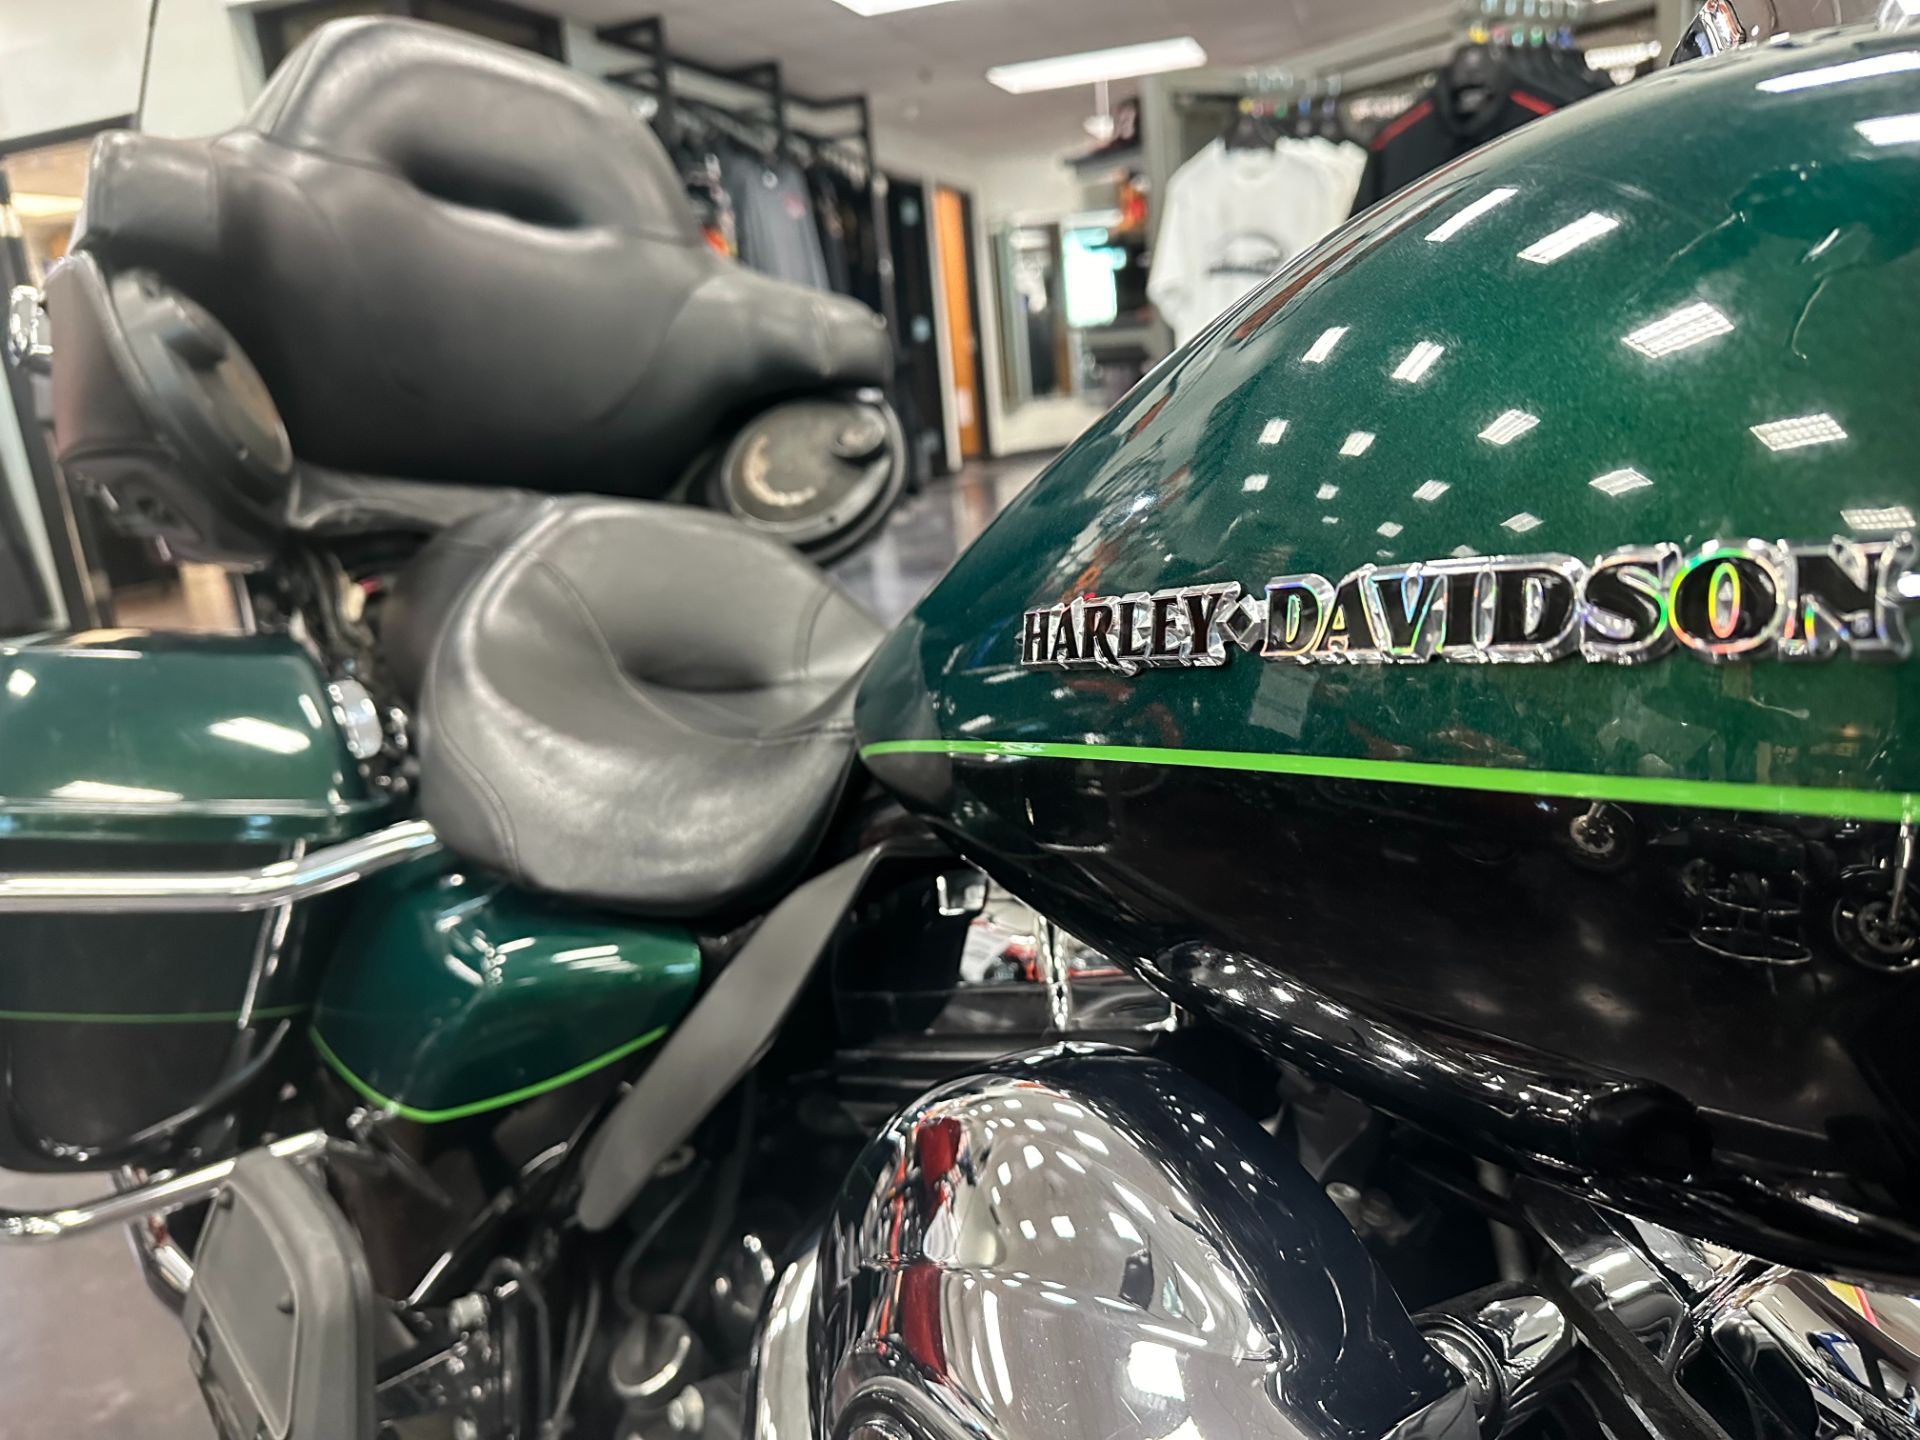 2015 Harley-Davidson Ultra Limited in Metairie, Louisiana - Photo 5